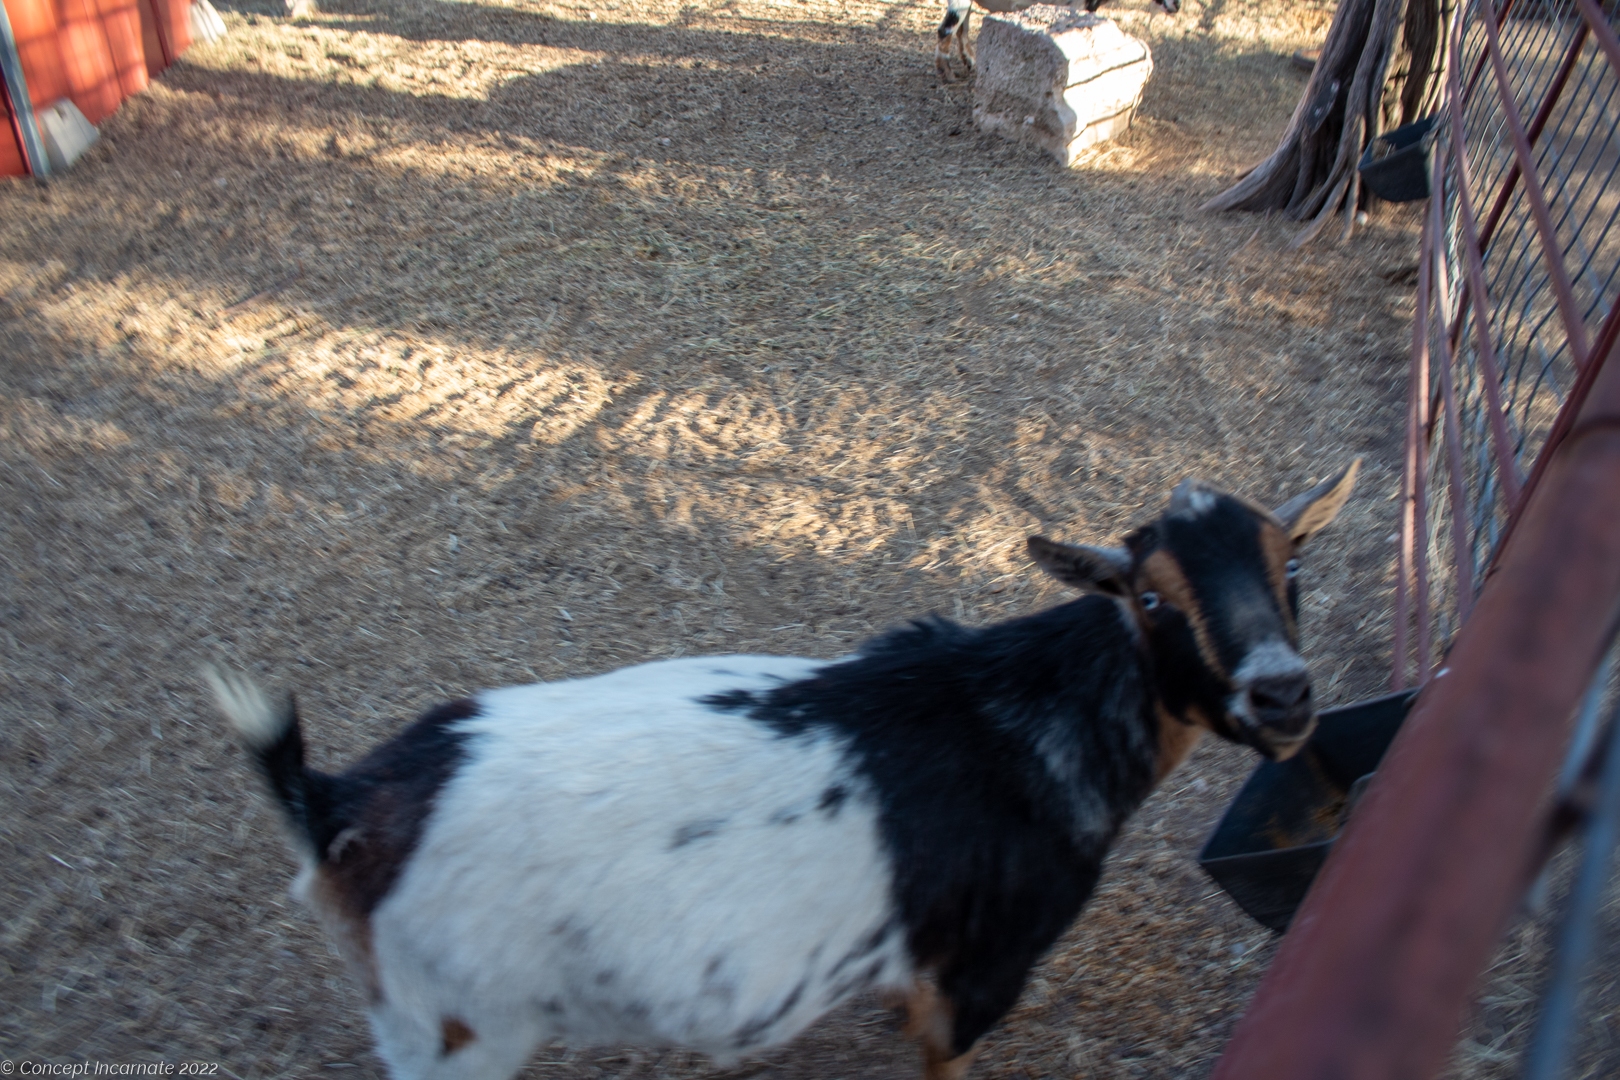 Goat eating feed.